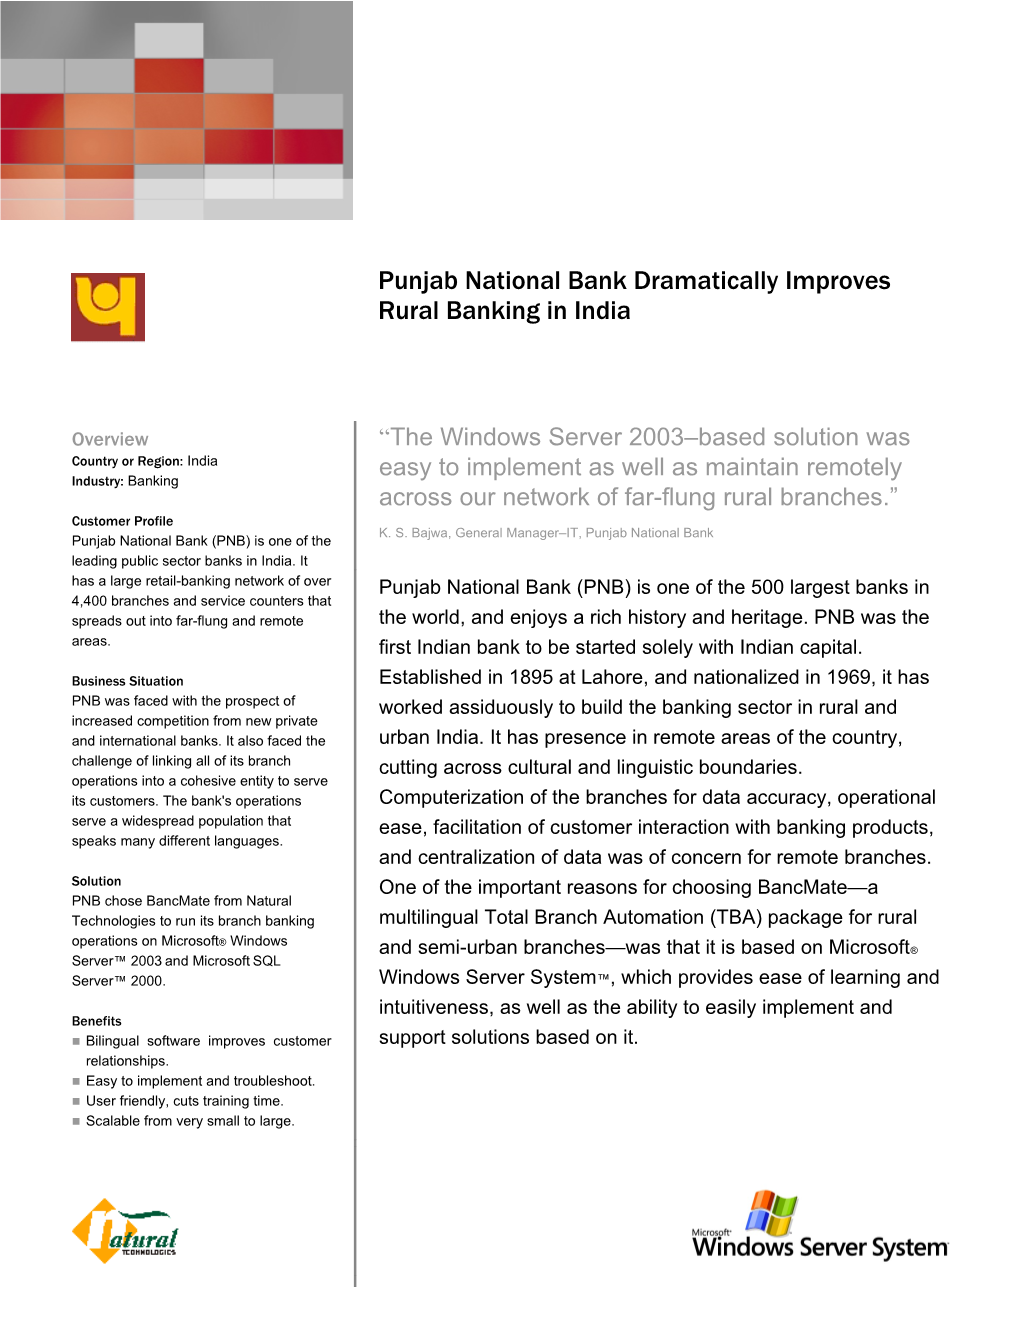 Punjab National Bank Dramatically Improves Rural Banking in India